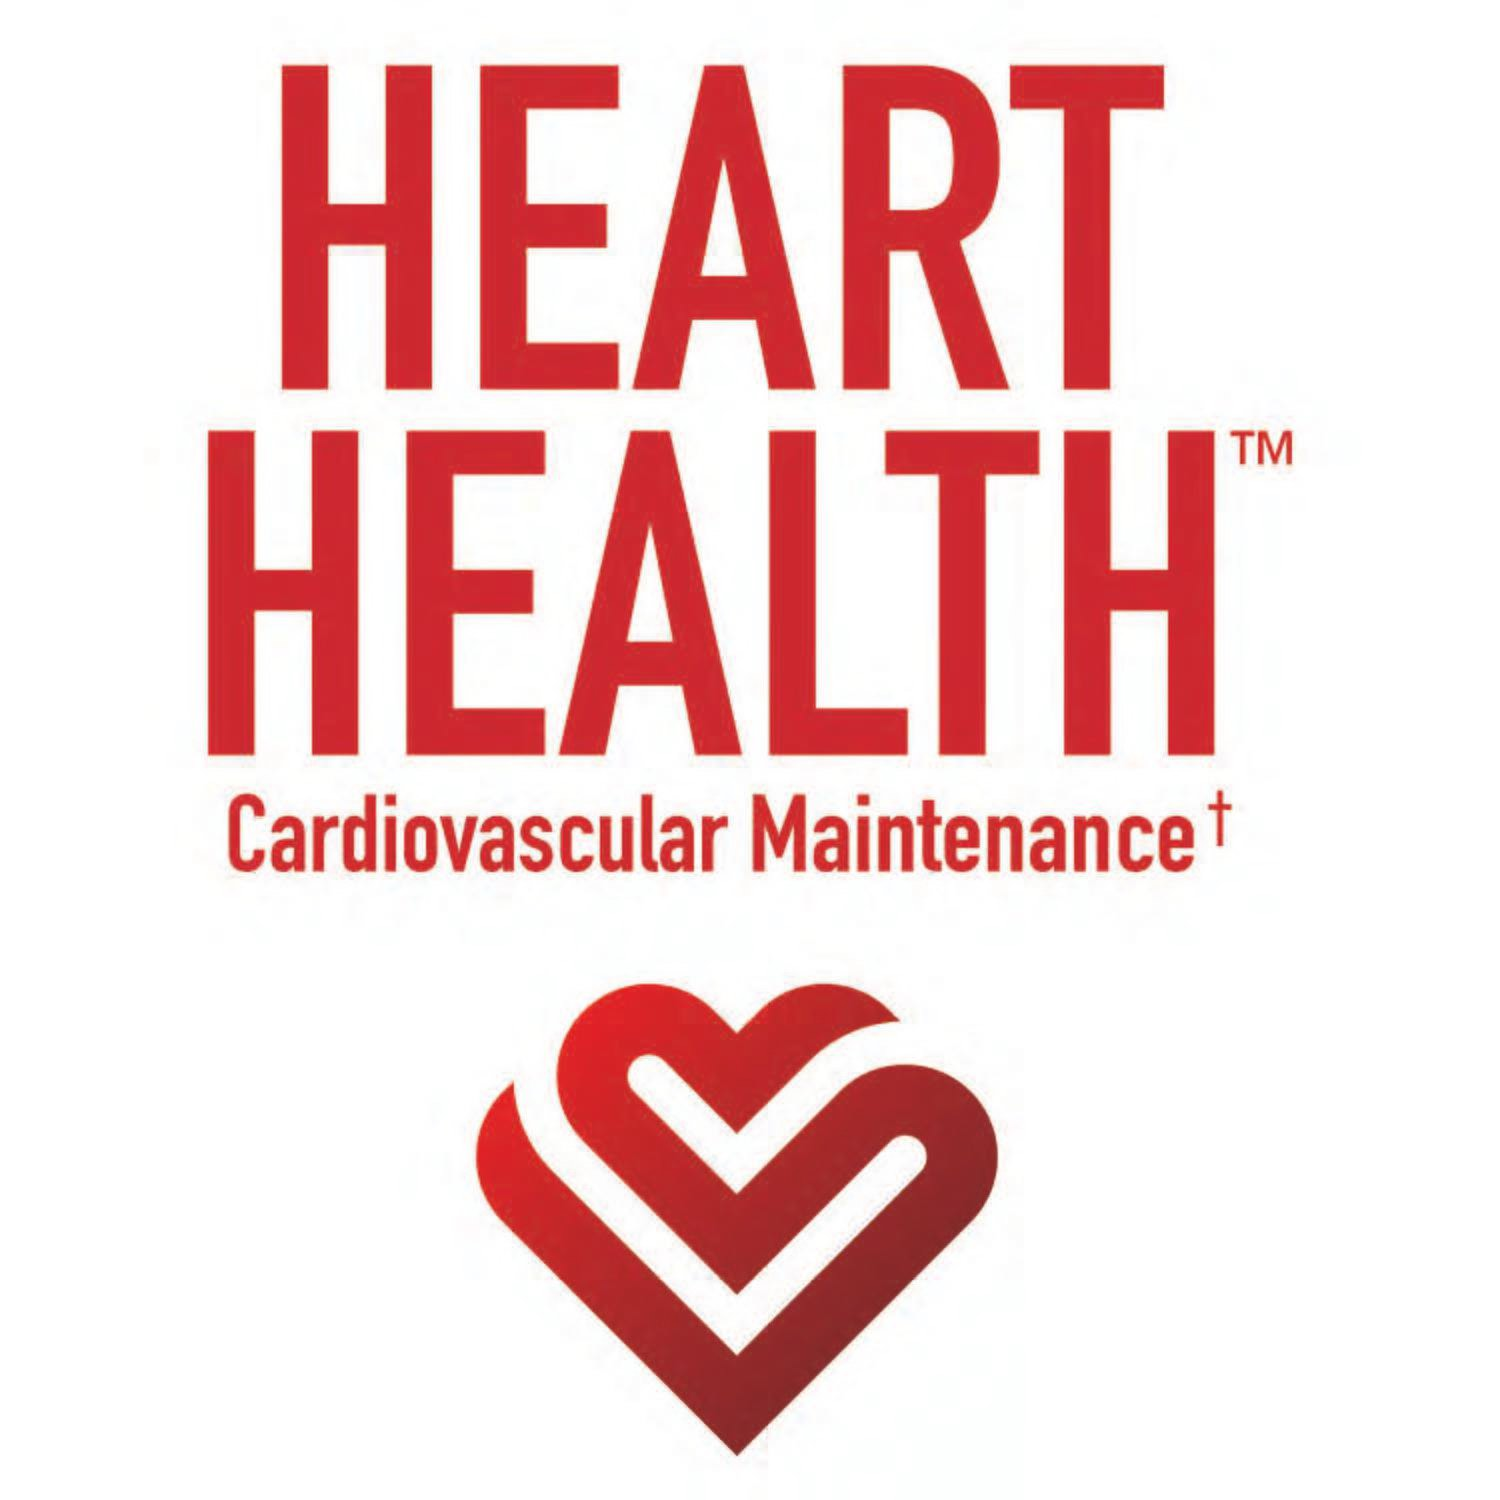  HEART HEALTH CARDIOVASCULAR MAINTENANCE